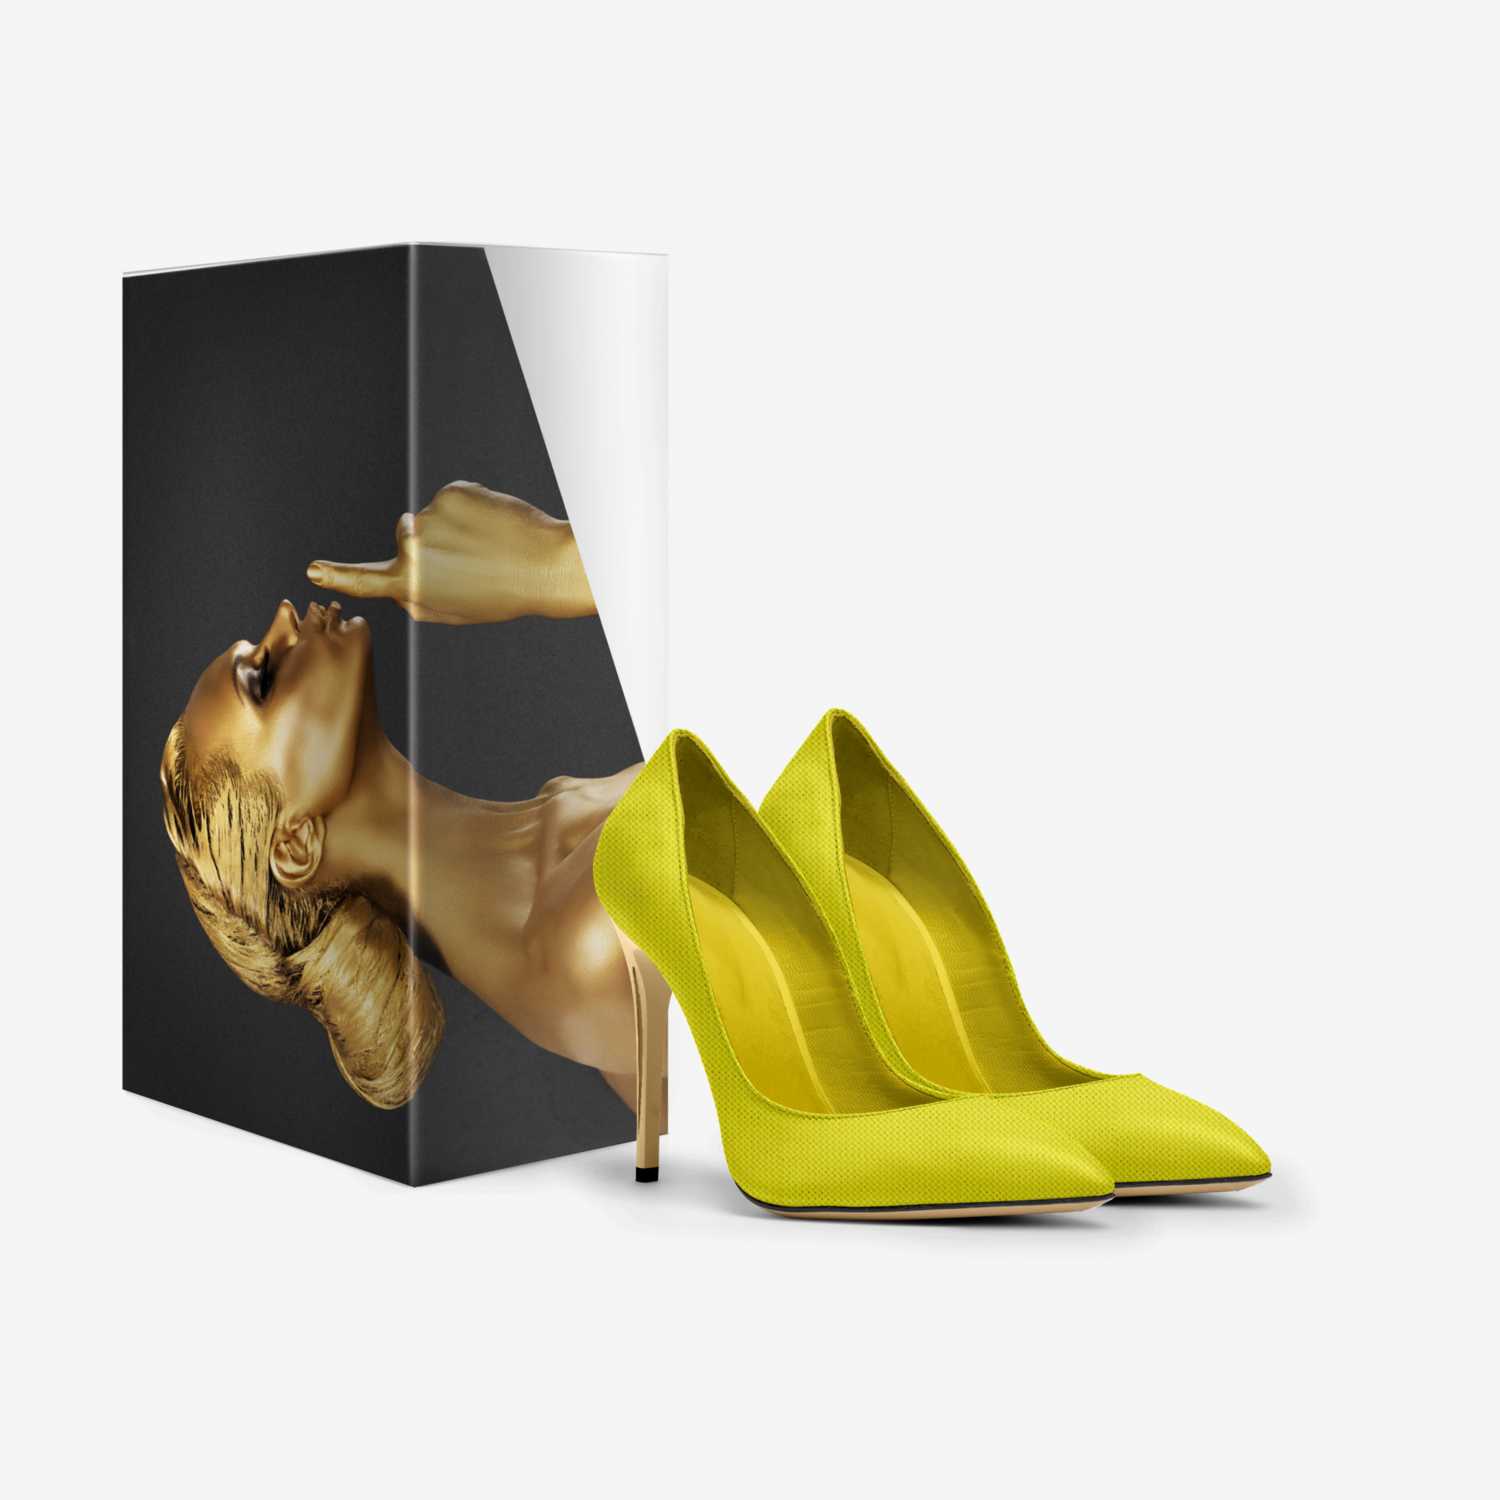 Alexanders custom made in Italy shoes by Darius Alexander | Box view